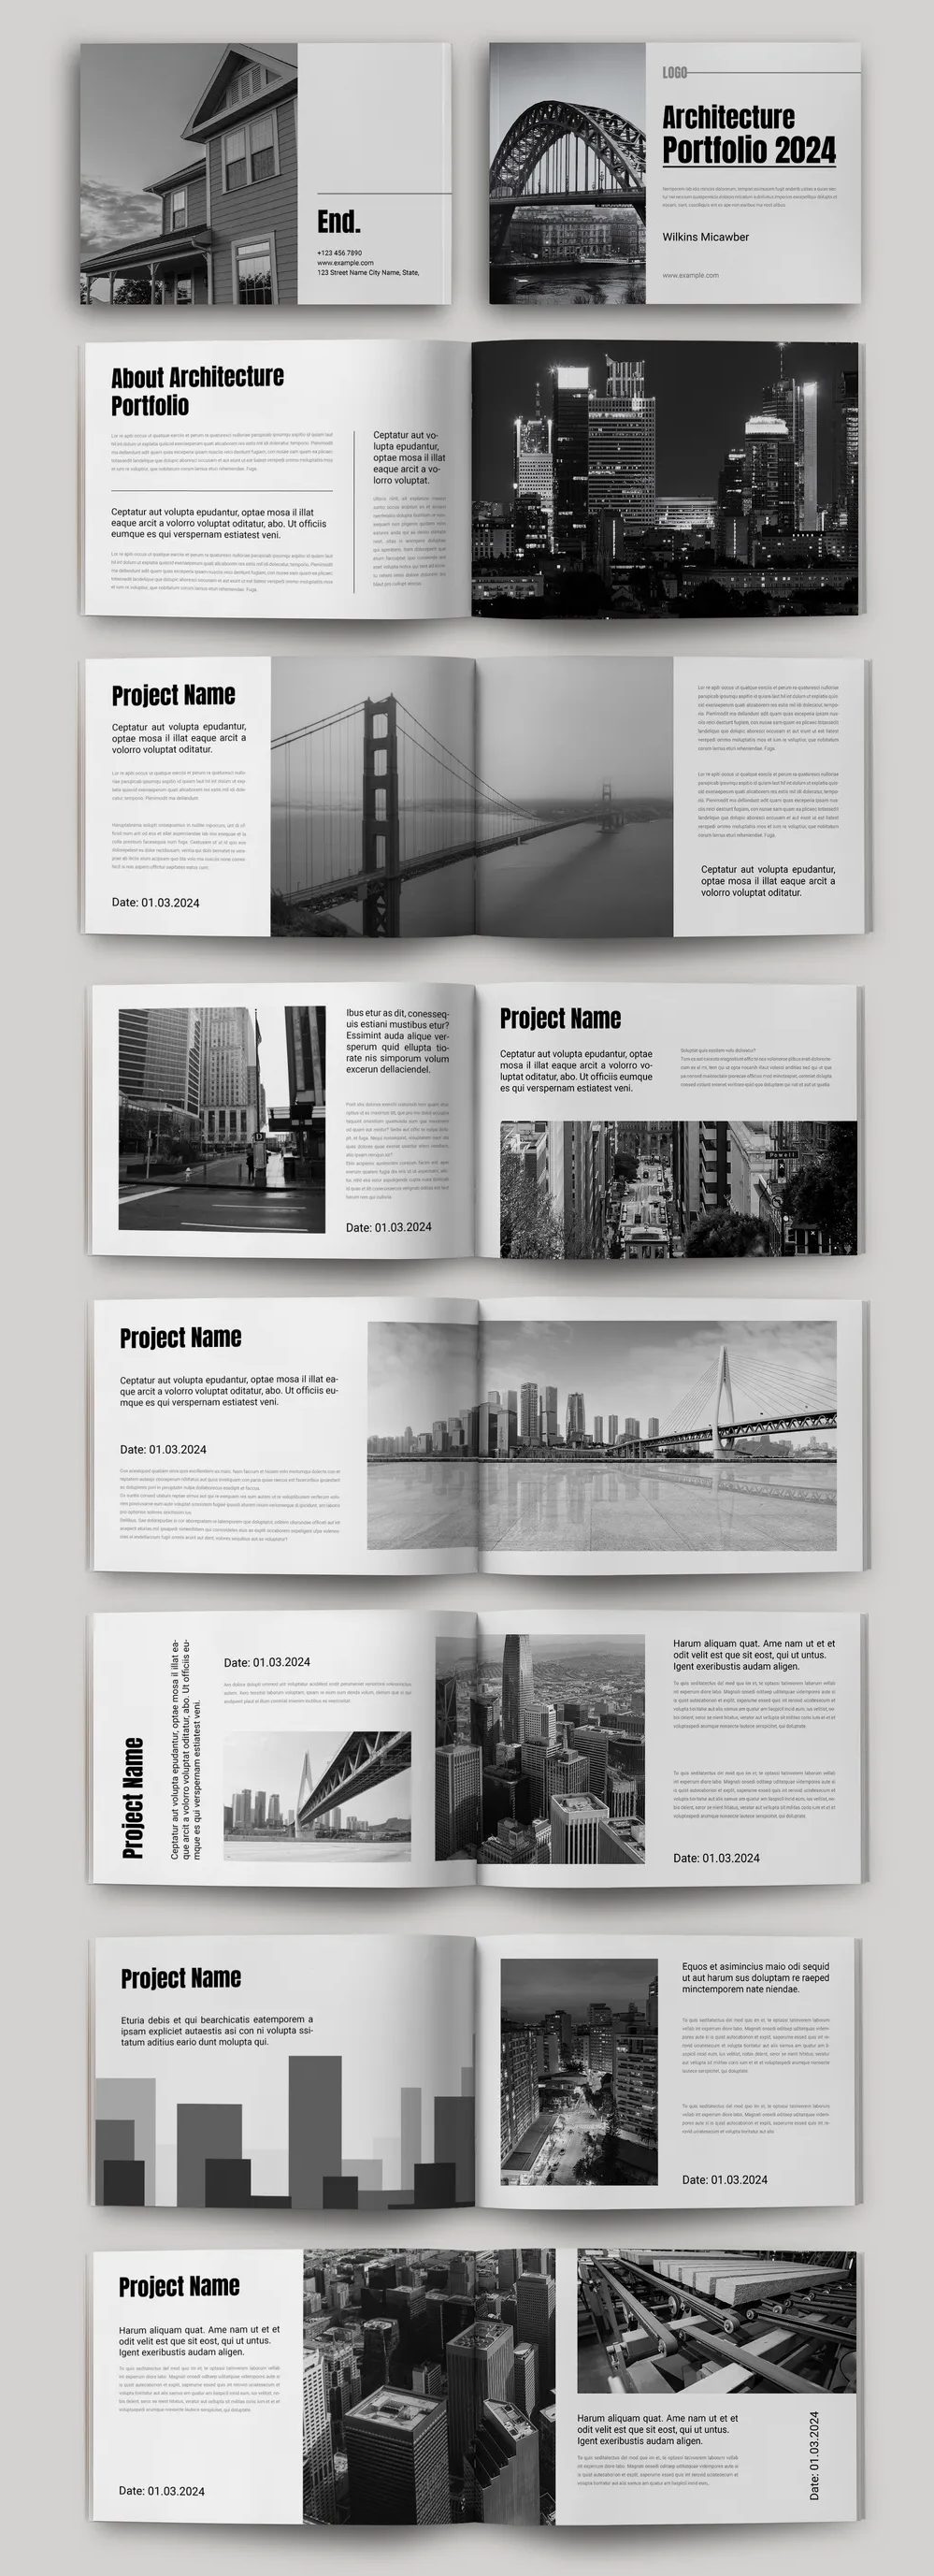 Adobestock - Architecture Portfolio Layout 723806256